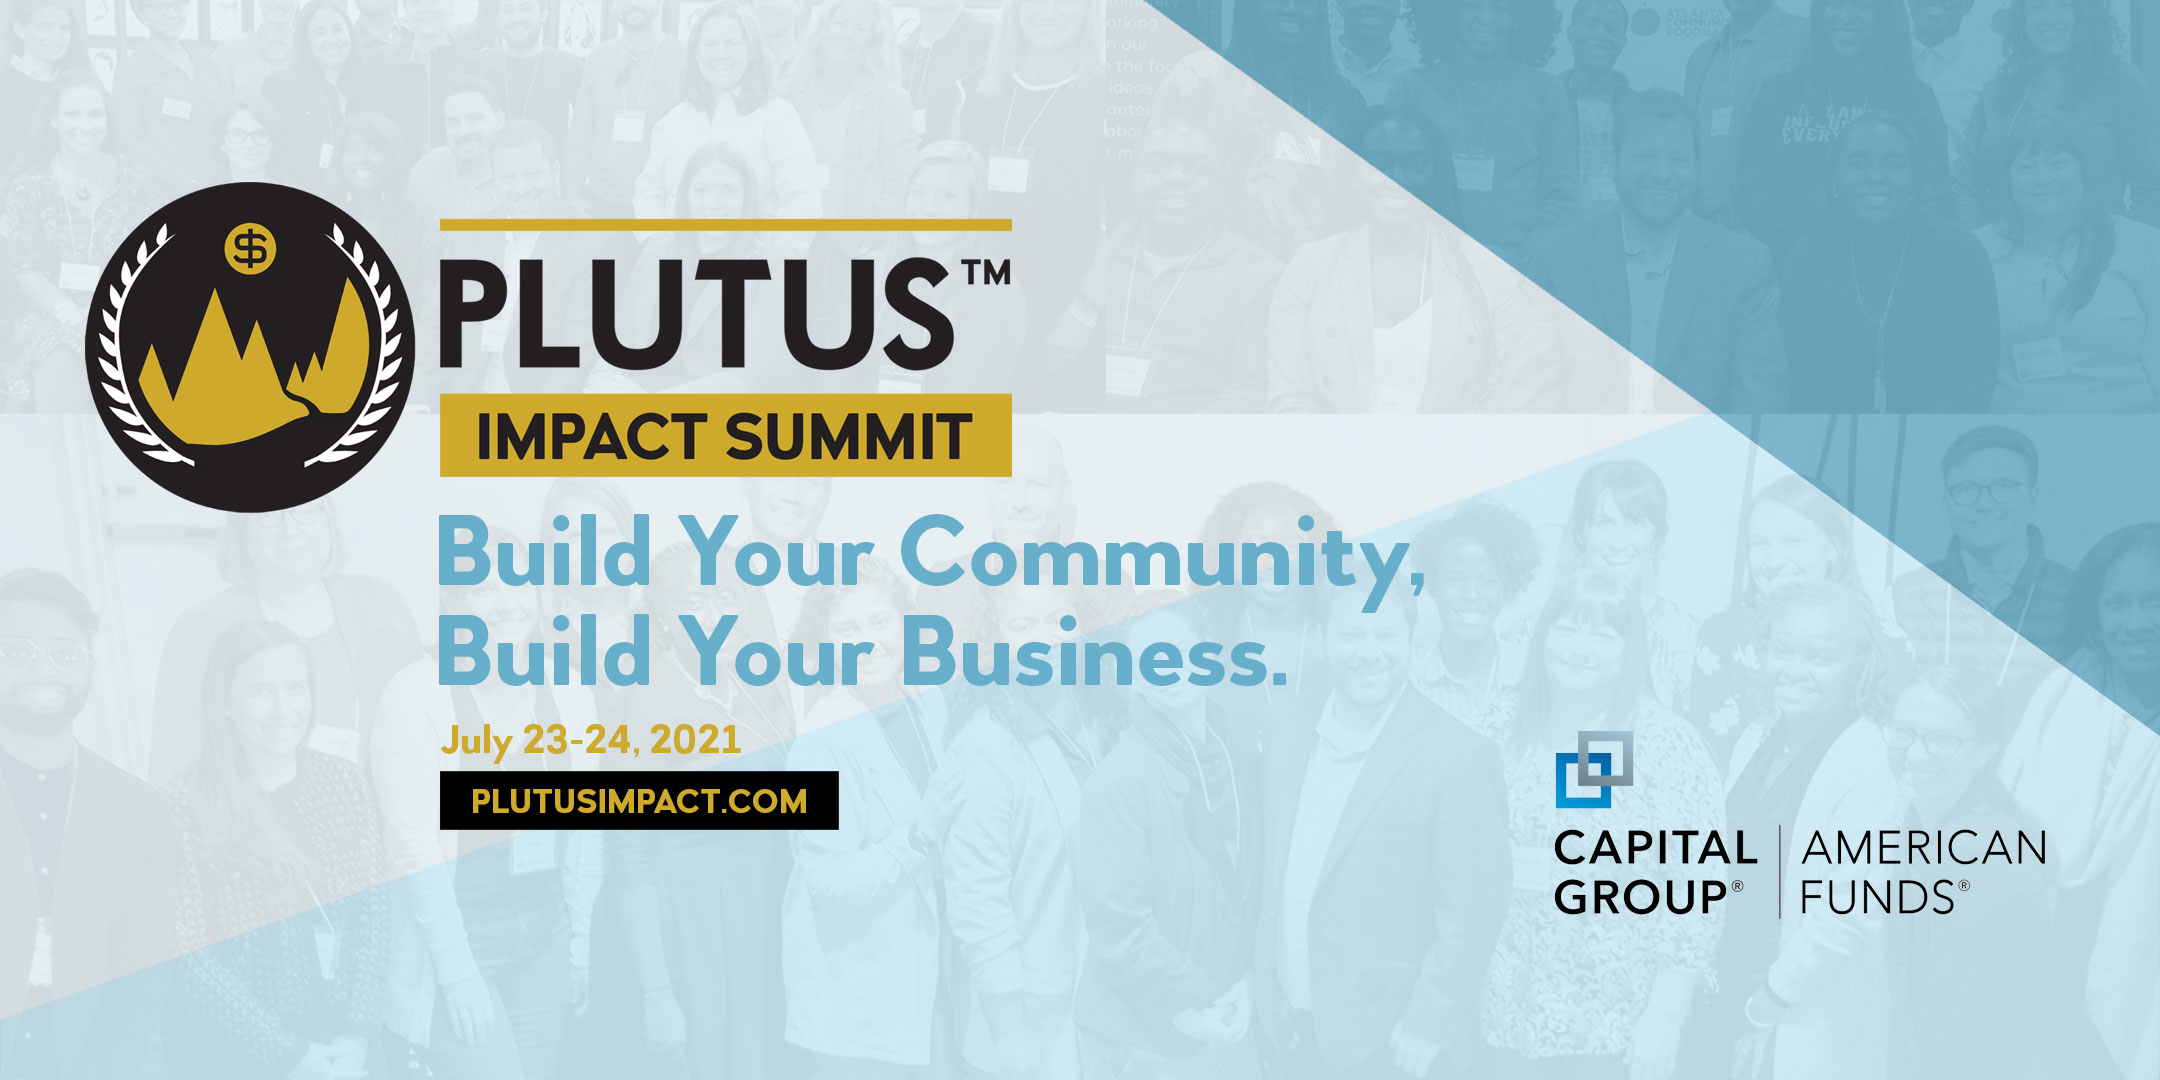 Plutus Impact Summit Featured Image